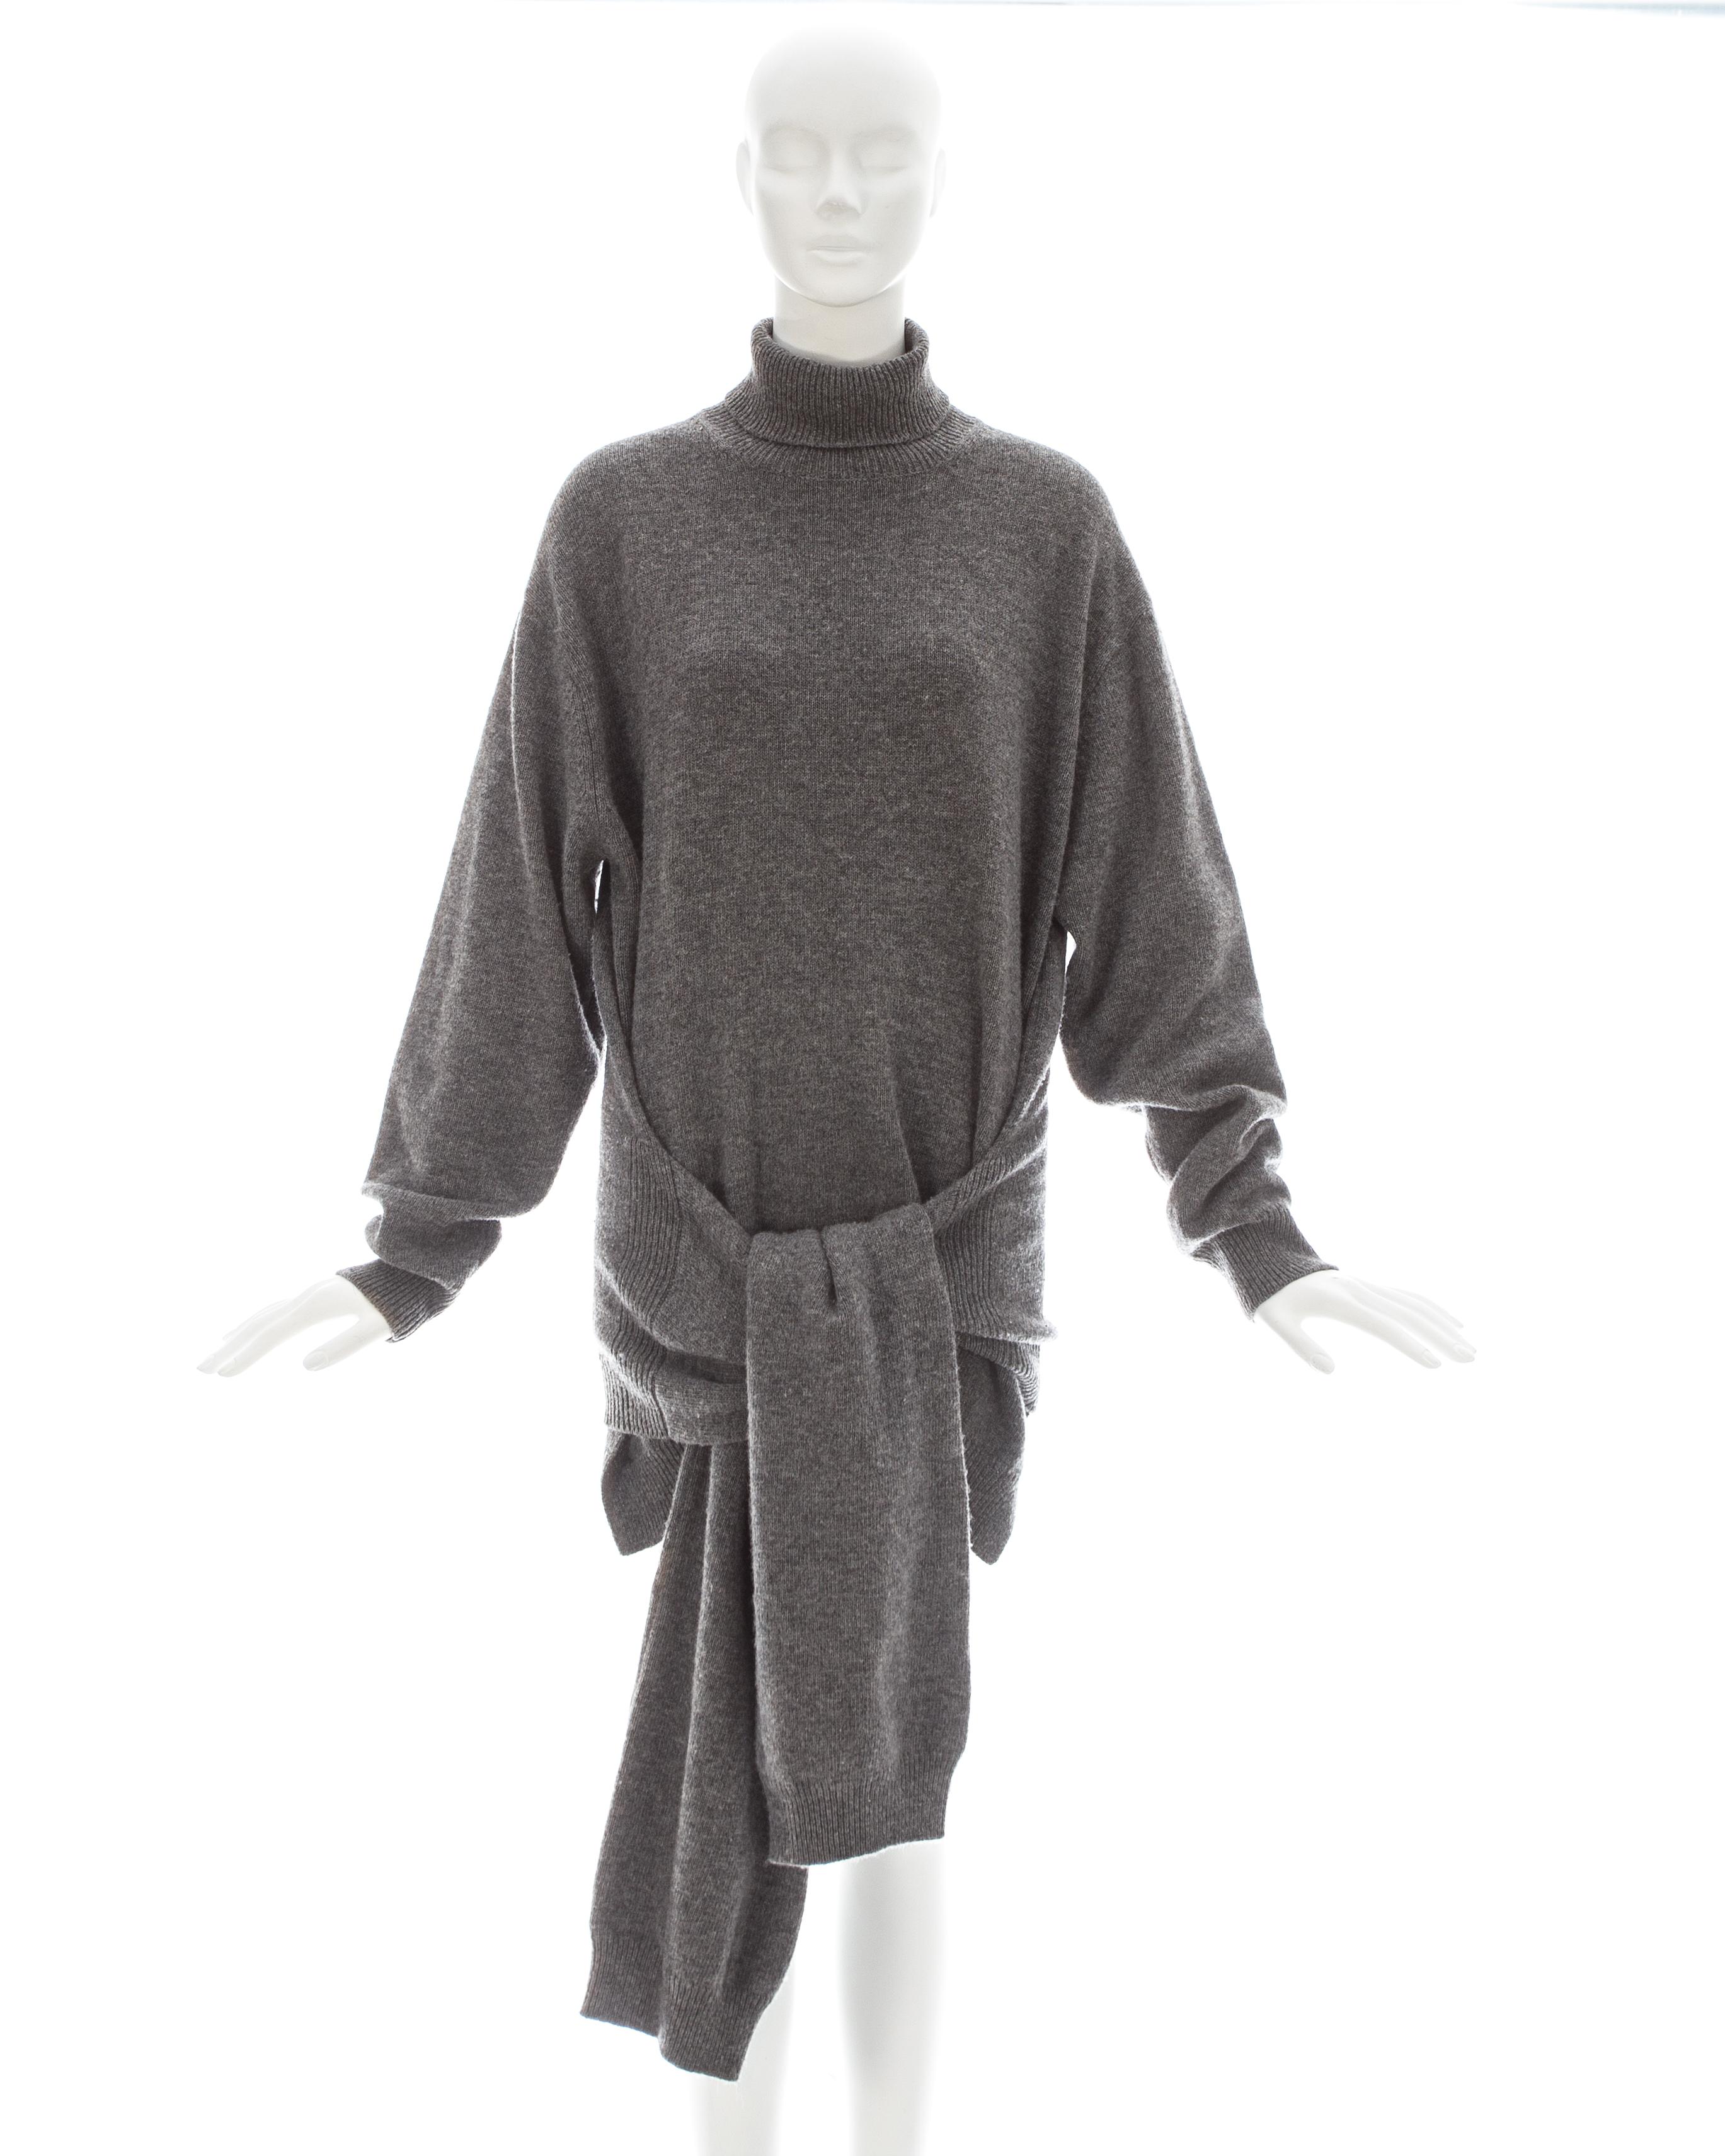 Yohji Yamamoto; Grey wool turtle neck sweater with 4 sleeves with ribbed cuffs 

Fall-Winter 1992